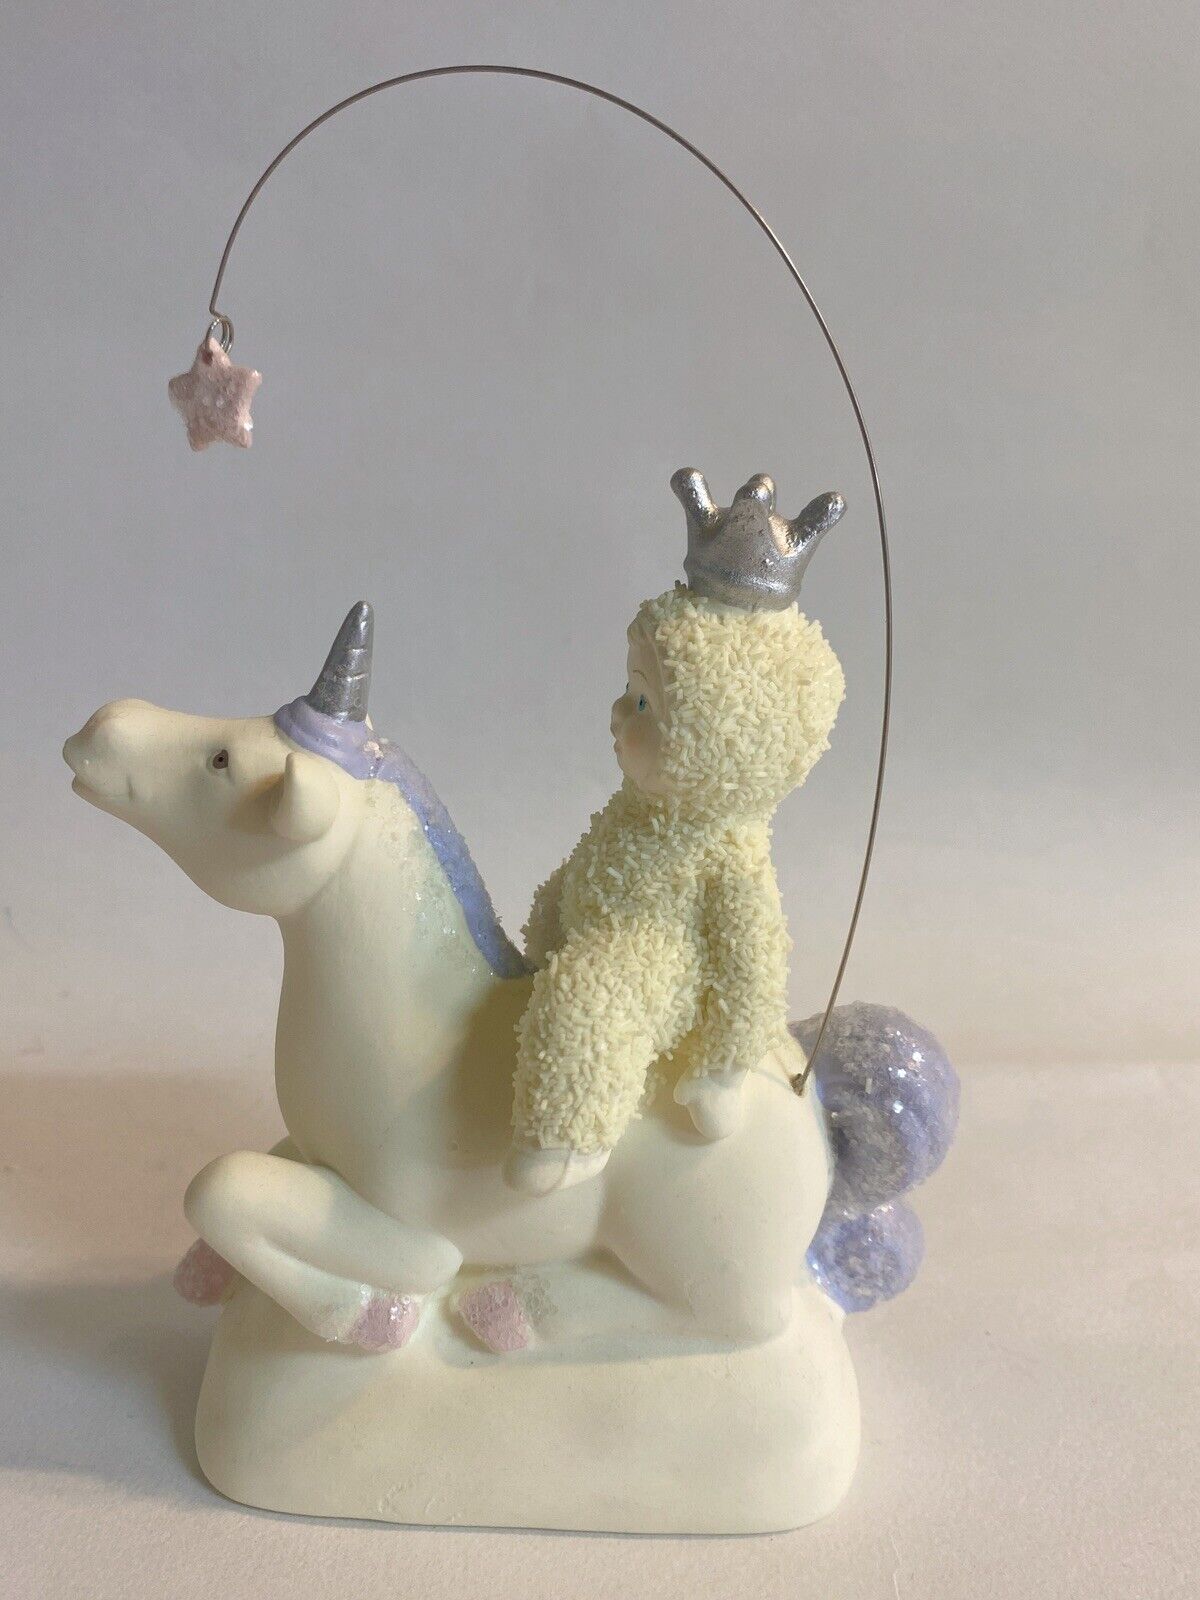 Dept 56 Snow Babies “Dream Big” Unicorn Figurine 6002858